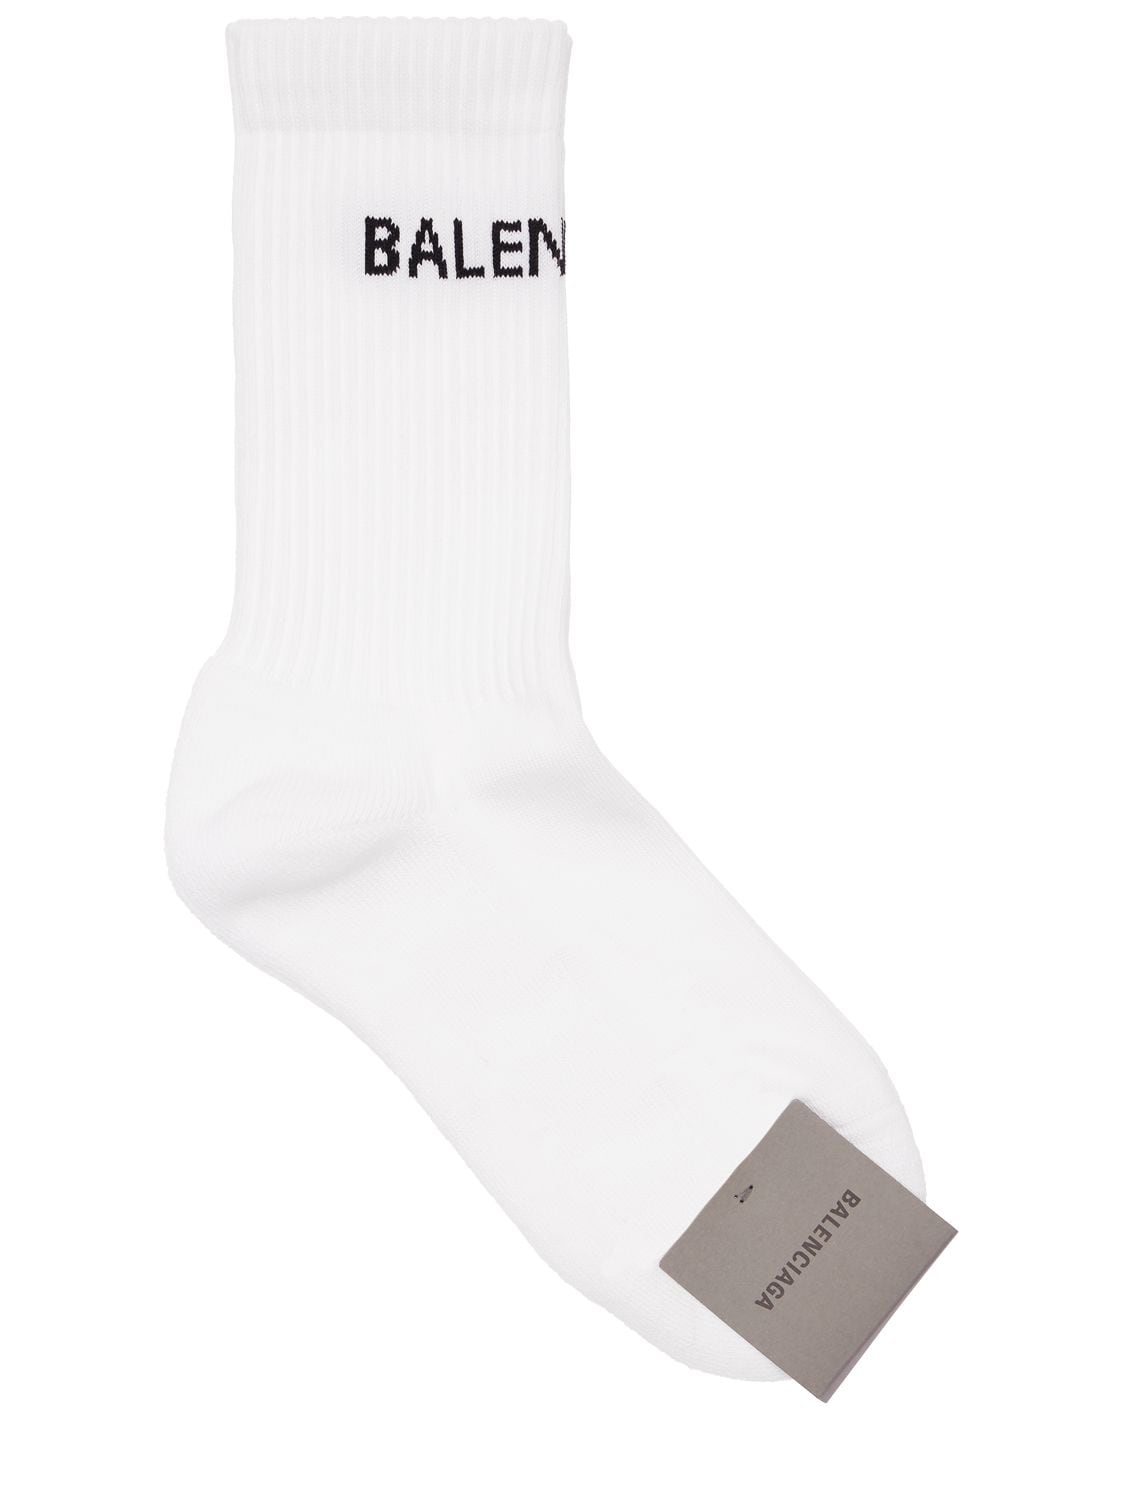 BALENCIAGA Logo Printed Tennis Socks